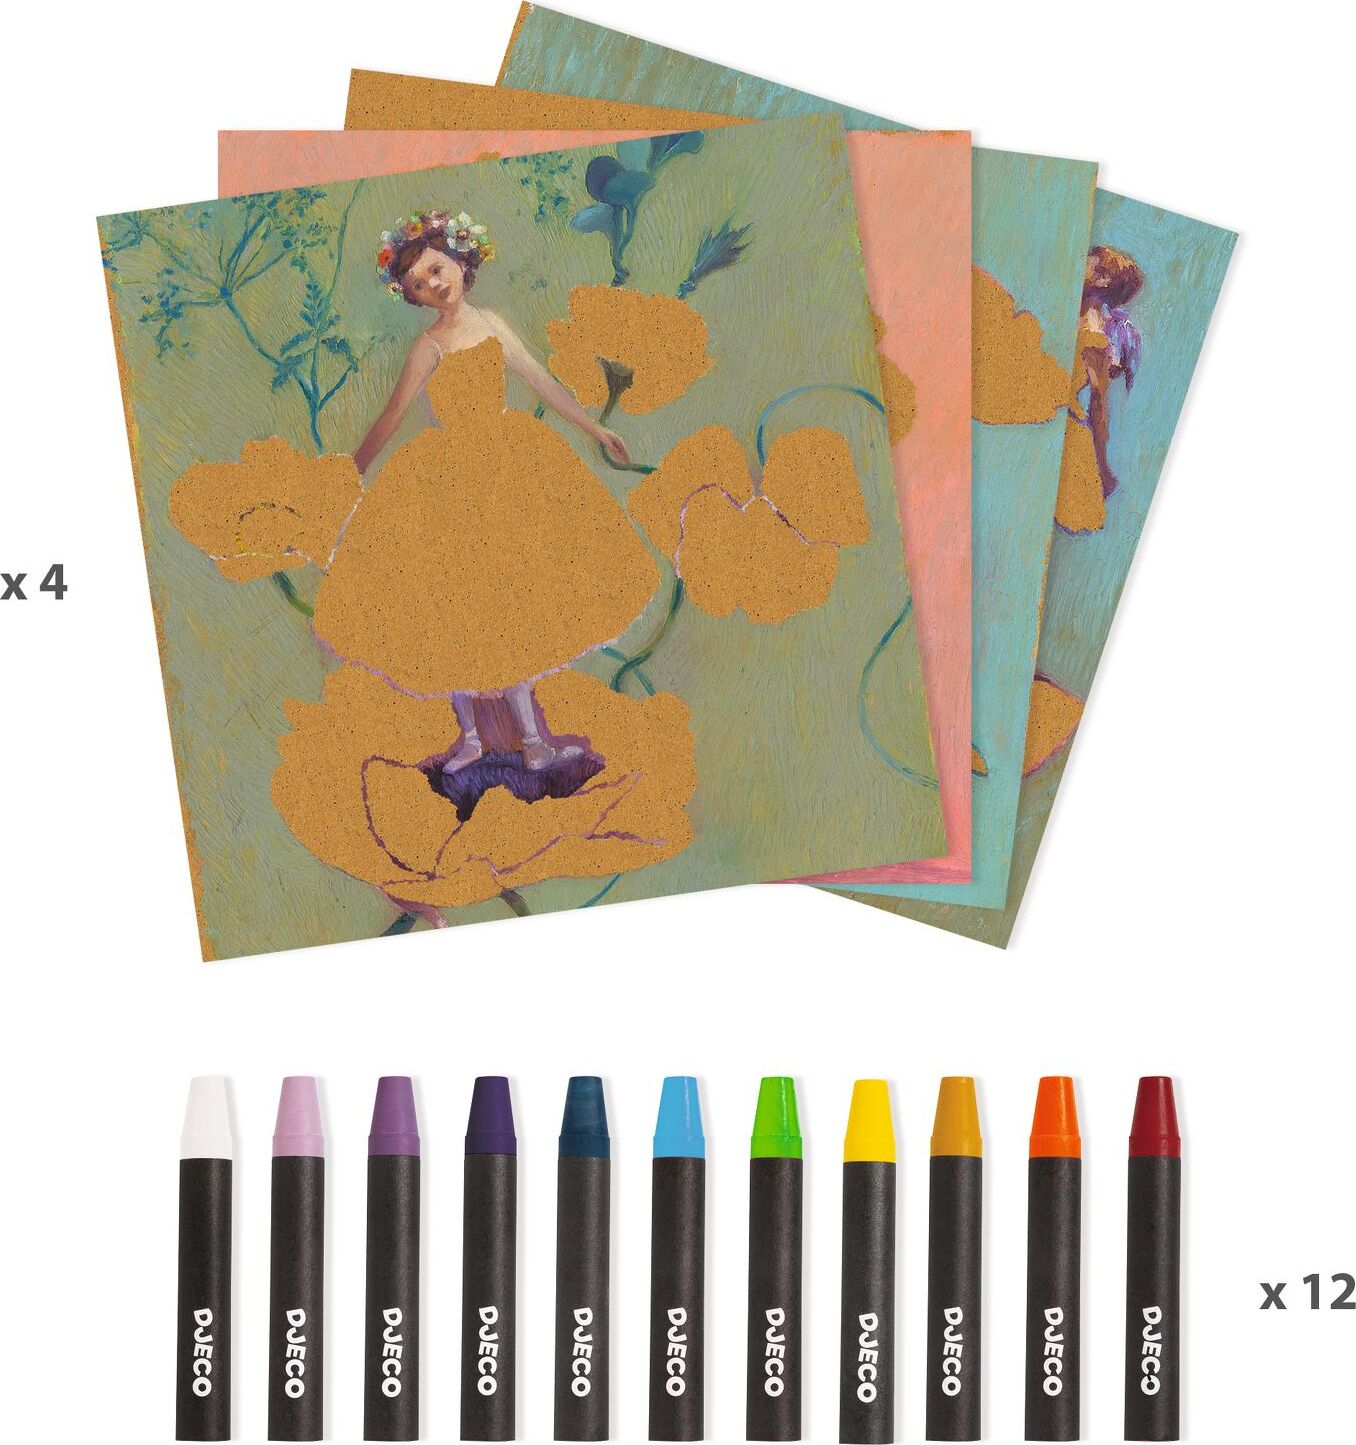 DJECO The Ballerina Inspired by Edgar Degas Wax Crayons Art Kit